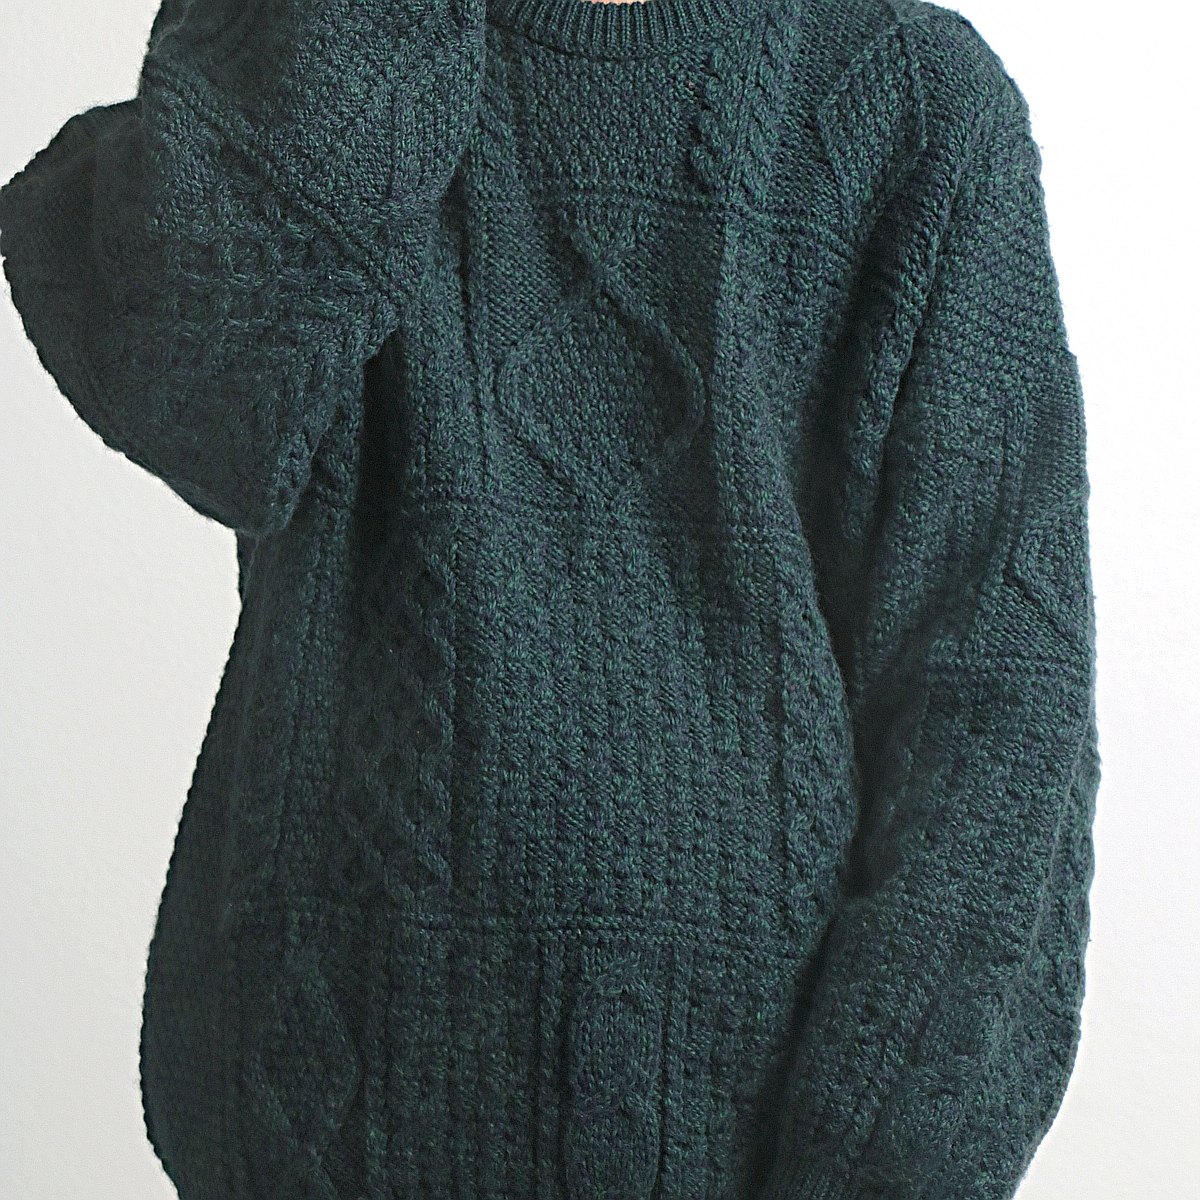 80s~ country knit wear アイルランド製 アランニット ウールセーター